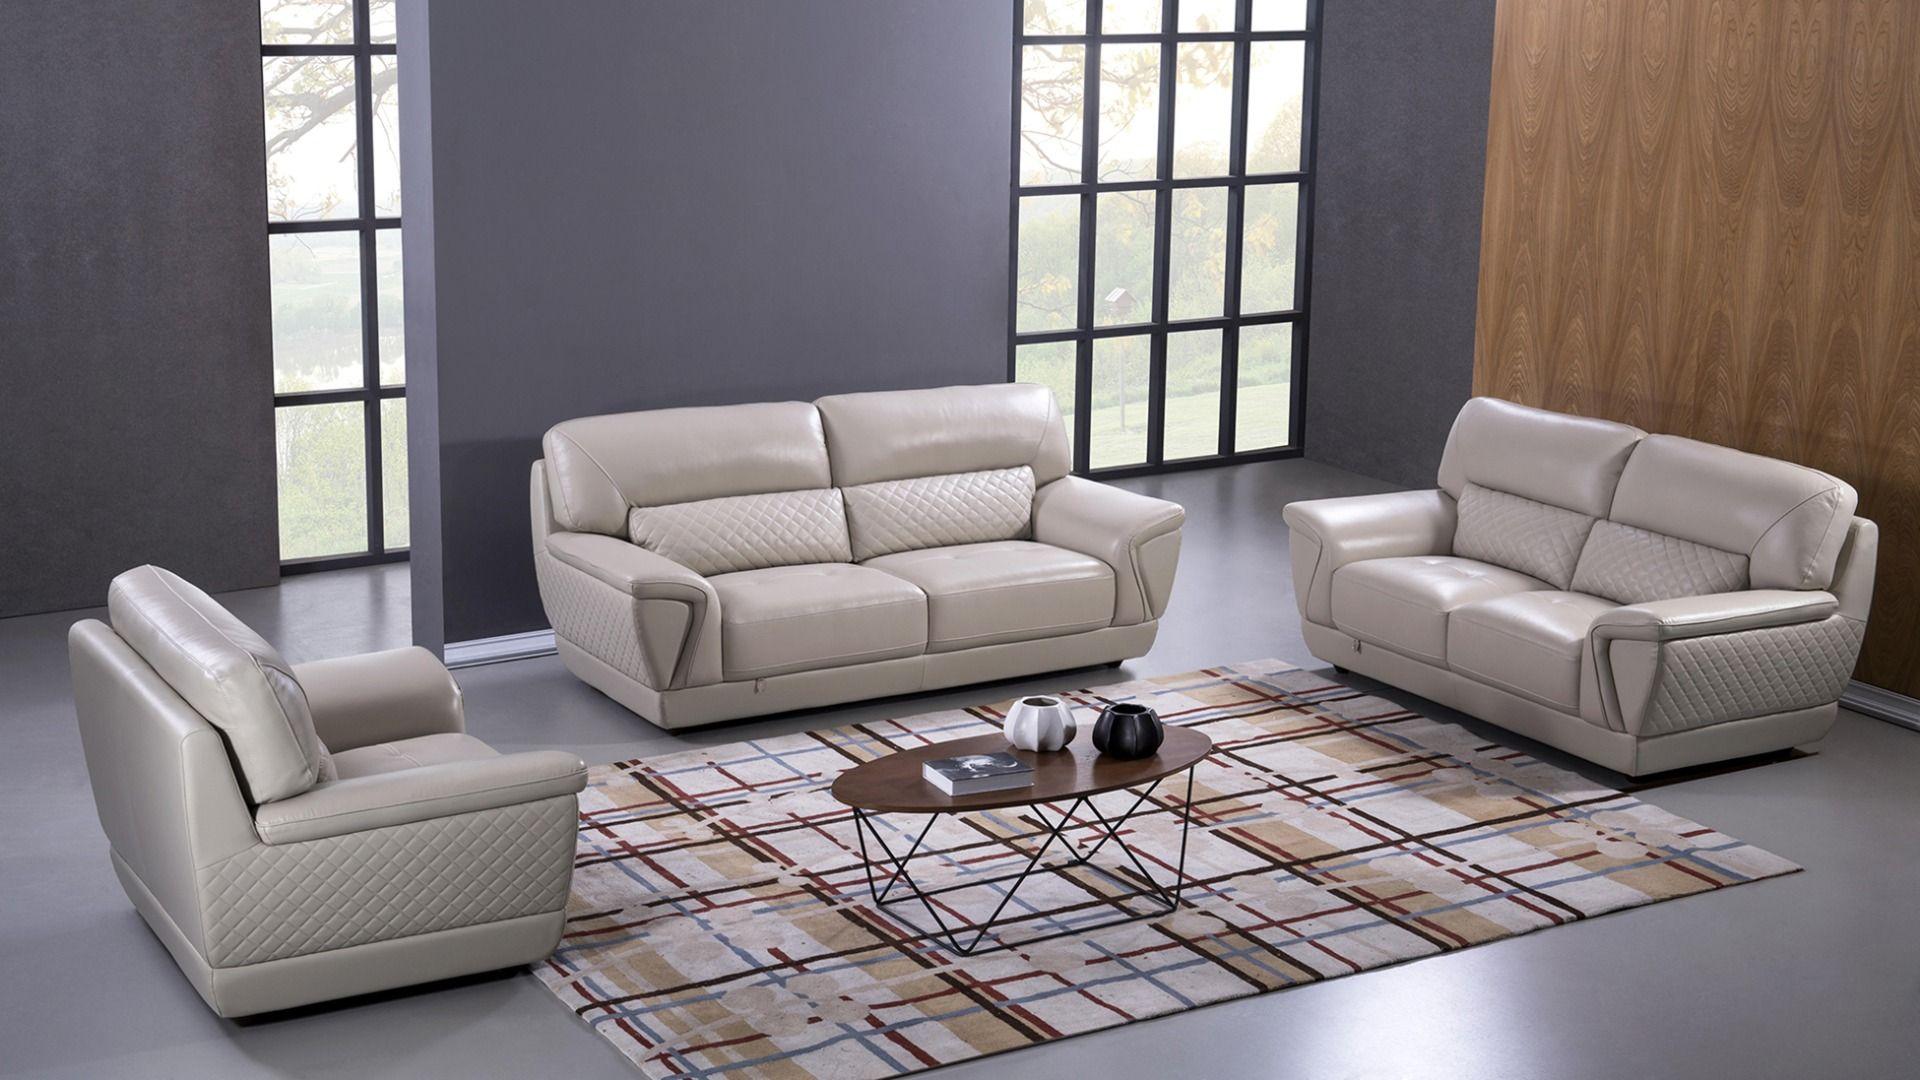 

                    
American Eagle Furniture EK099-LG-SF Sofa Light Gray Italian Leather Purchase 
